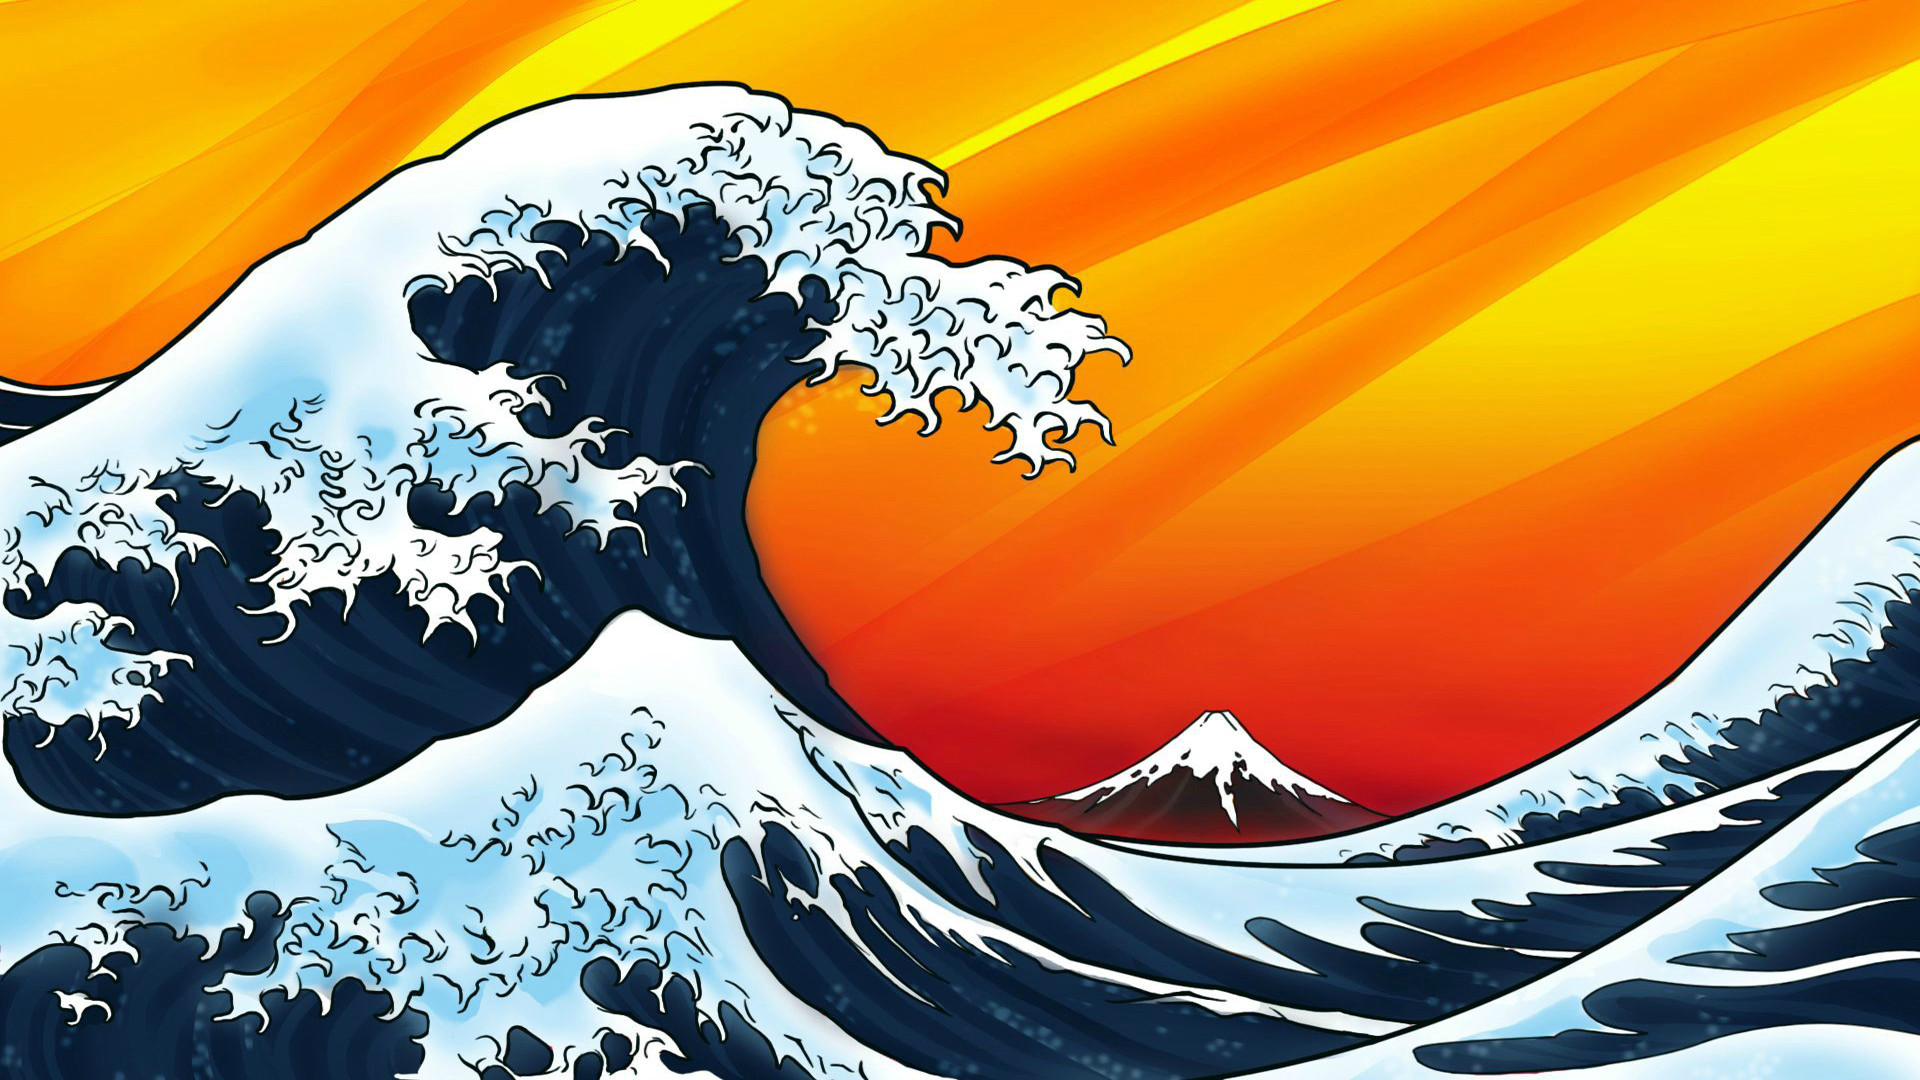 Artistic The Great Wave Off Kanagawa 1920x1080